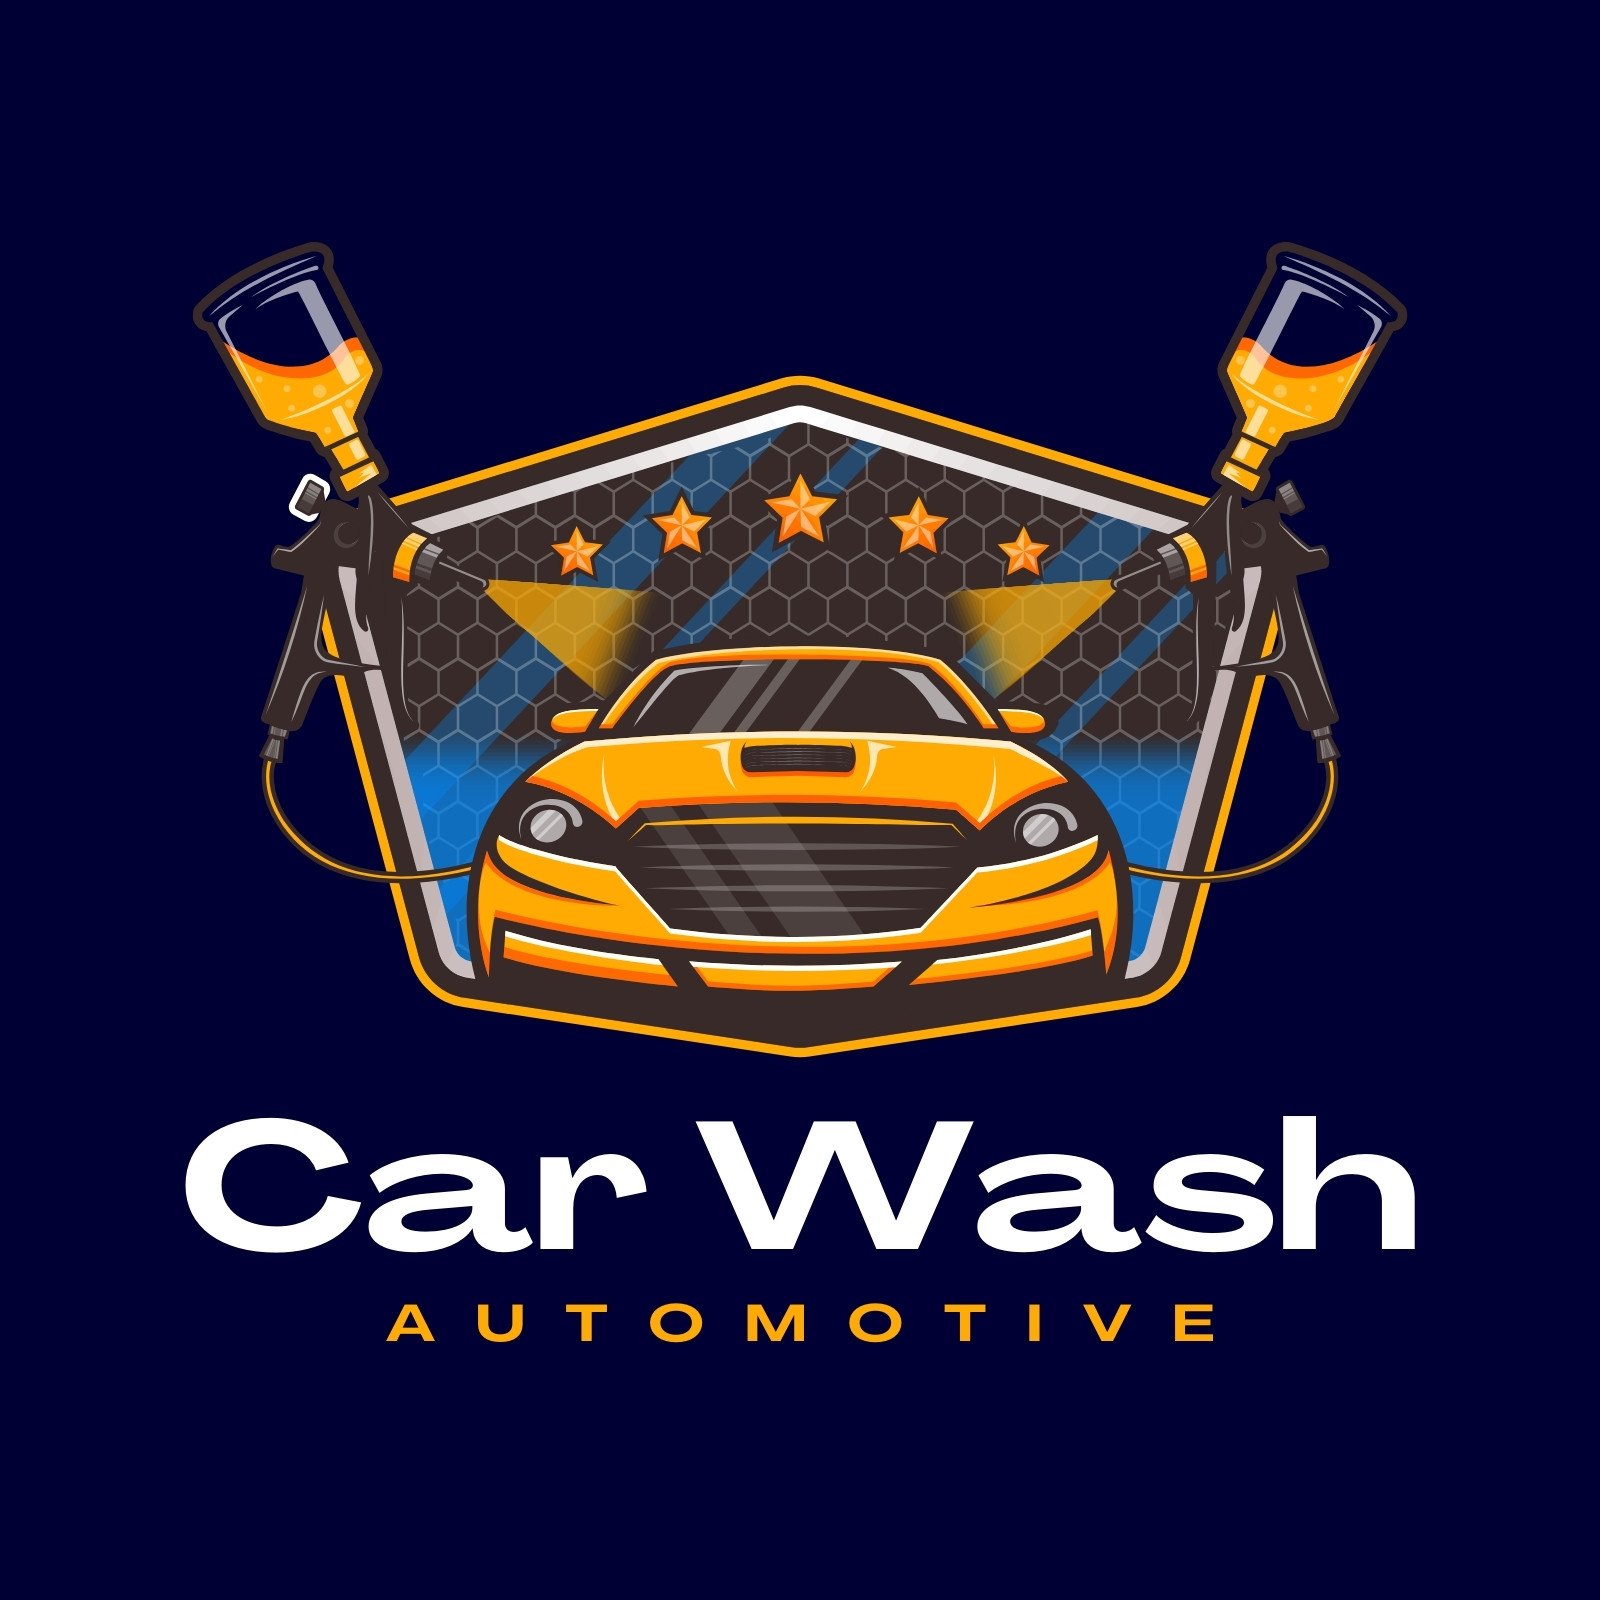 Custom Carwash Concepts